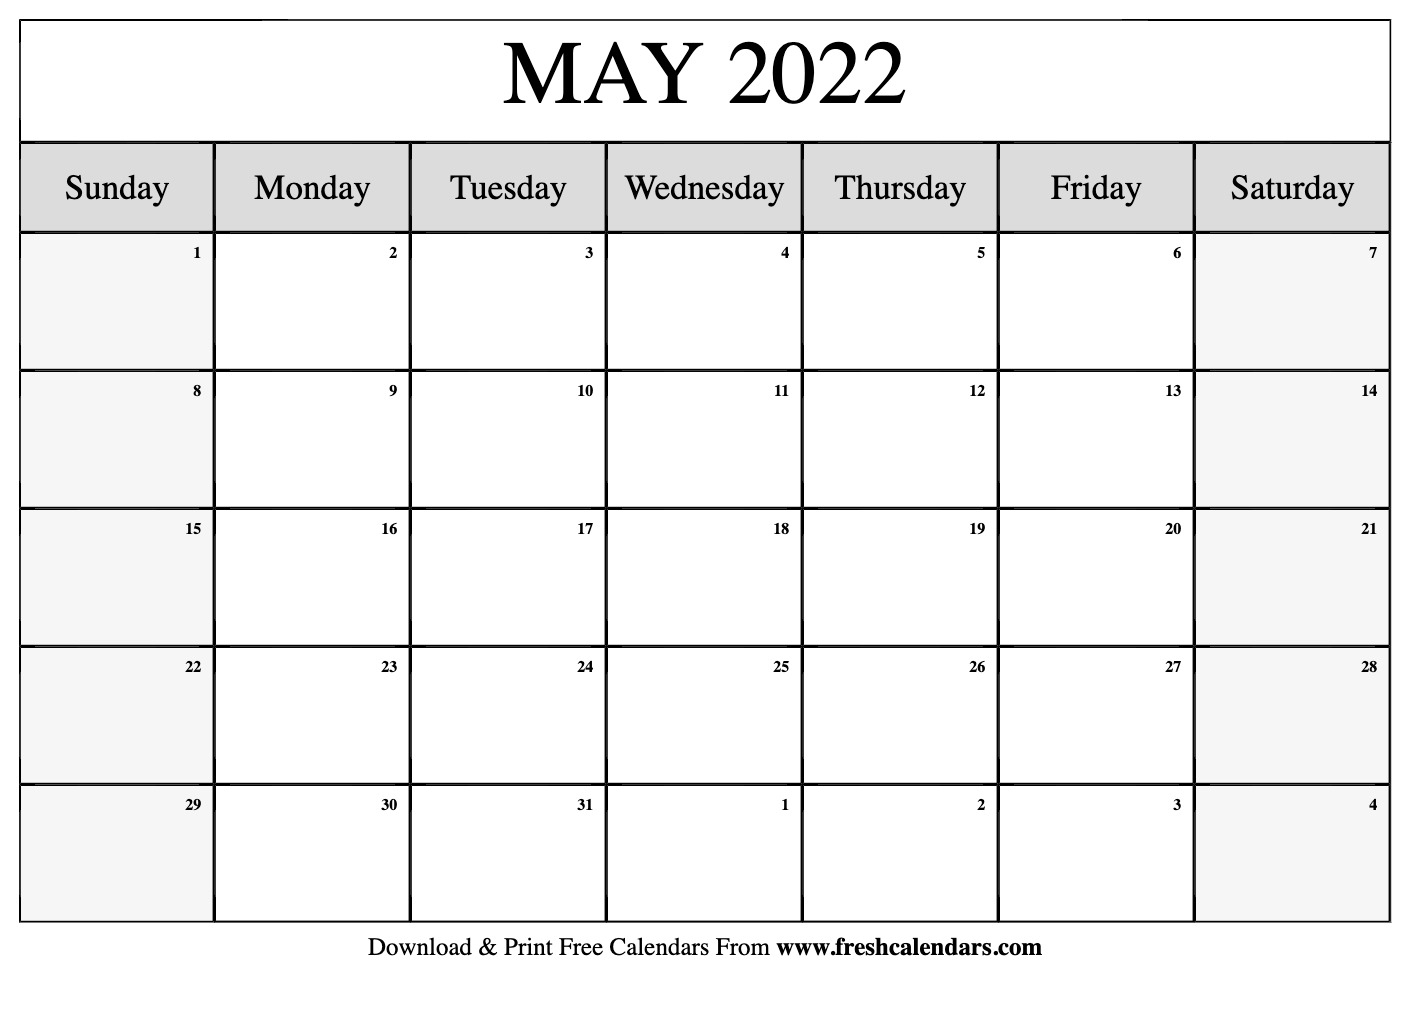 Pick May 2022 Calendar Images